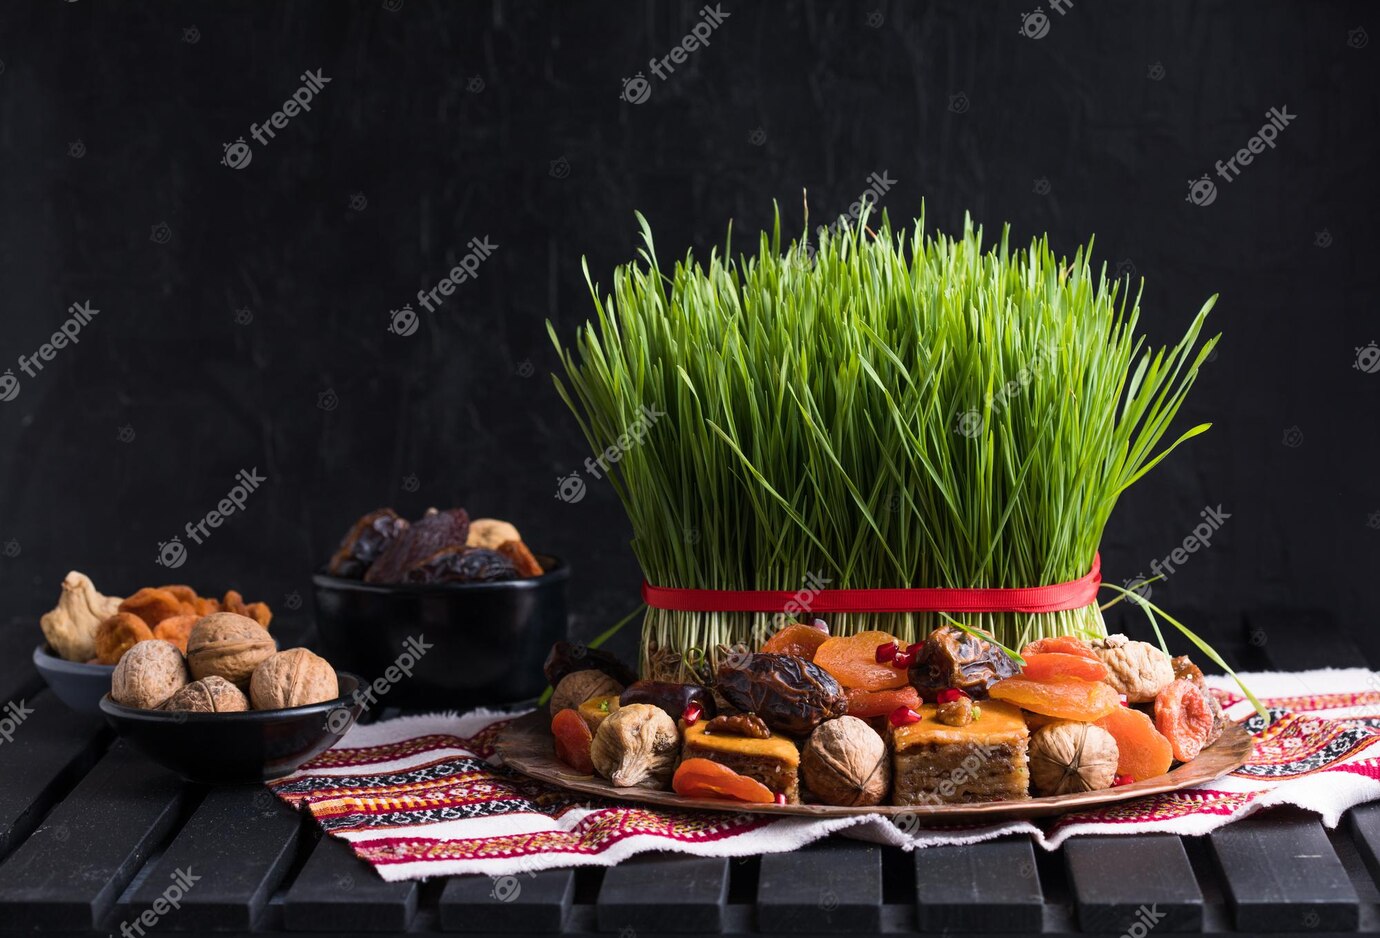 novruz setting table decoration wheat grass azerbaijan national pastry pakhlava new year sring celebration nature awakening 154293 9590